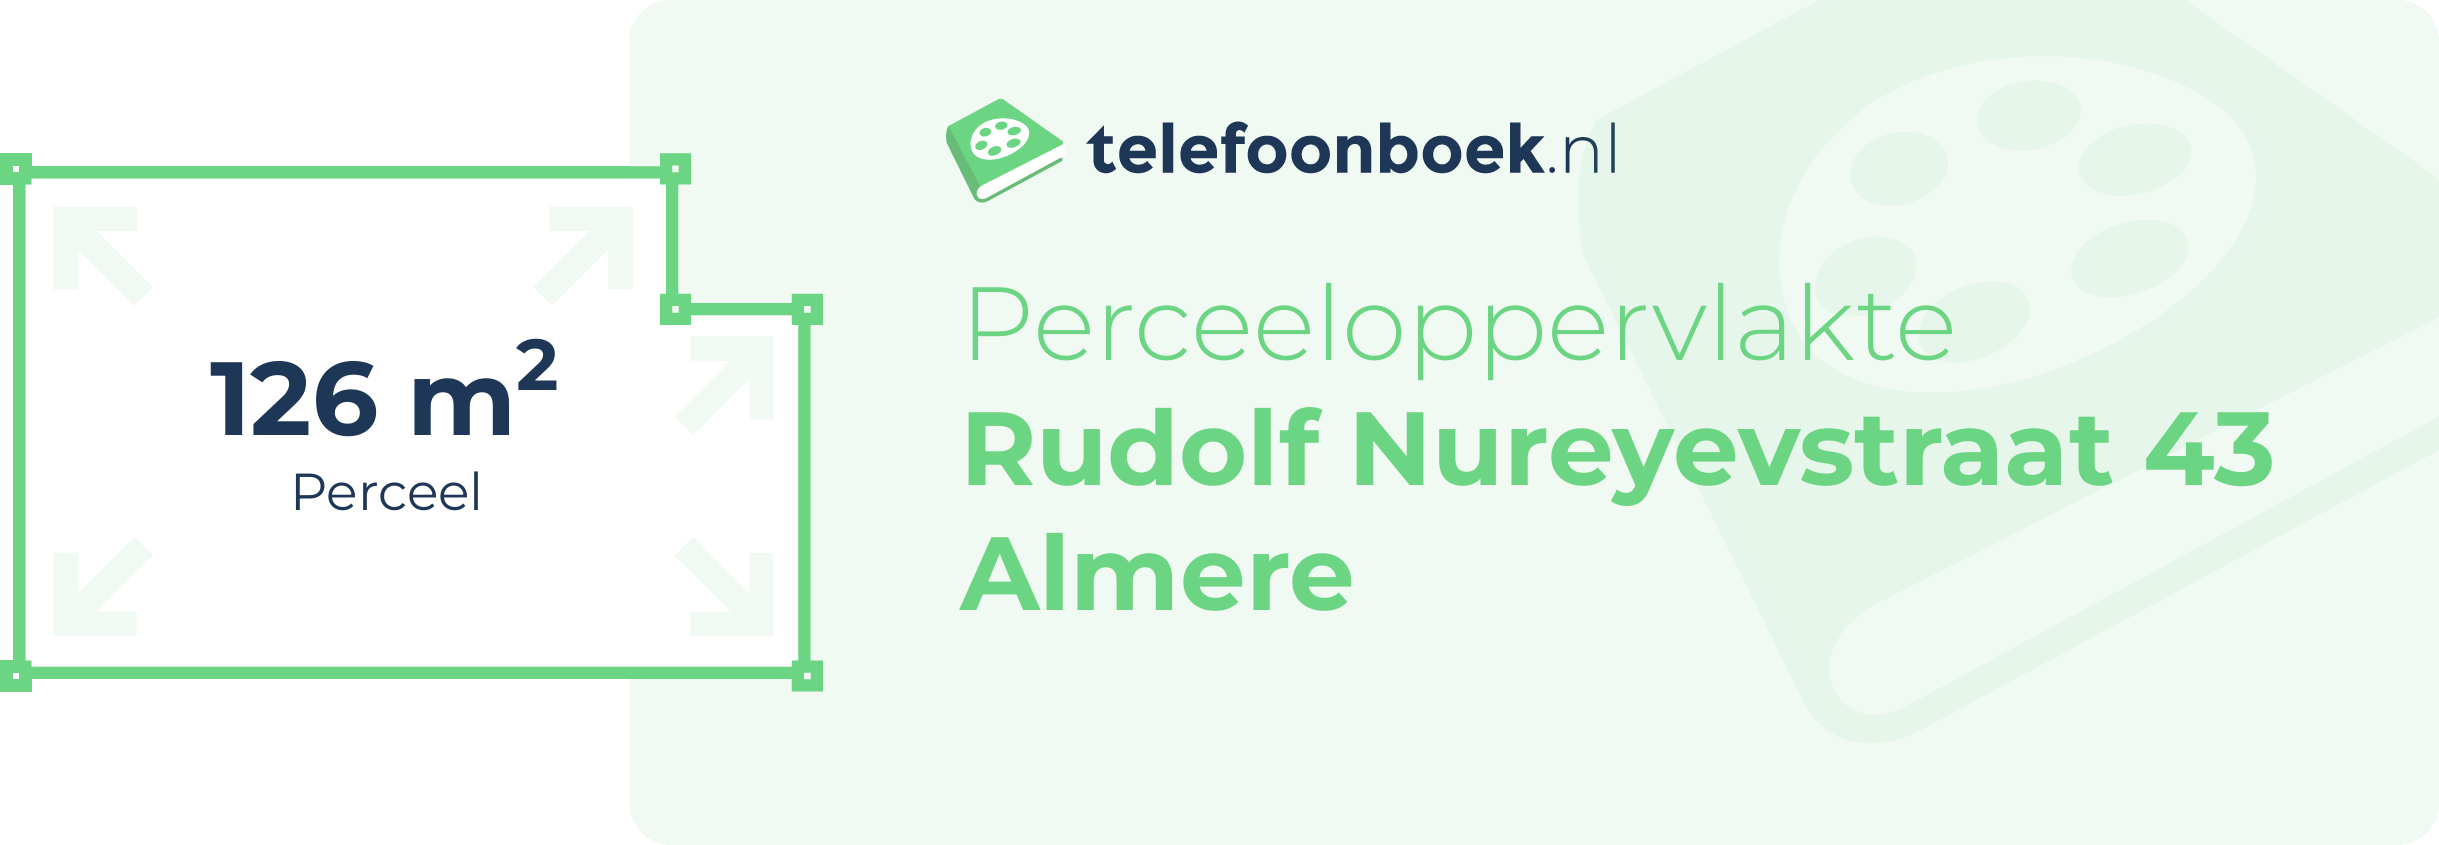 Perceeloppervlakte Rudolf Nureyevstraat 43 Almere